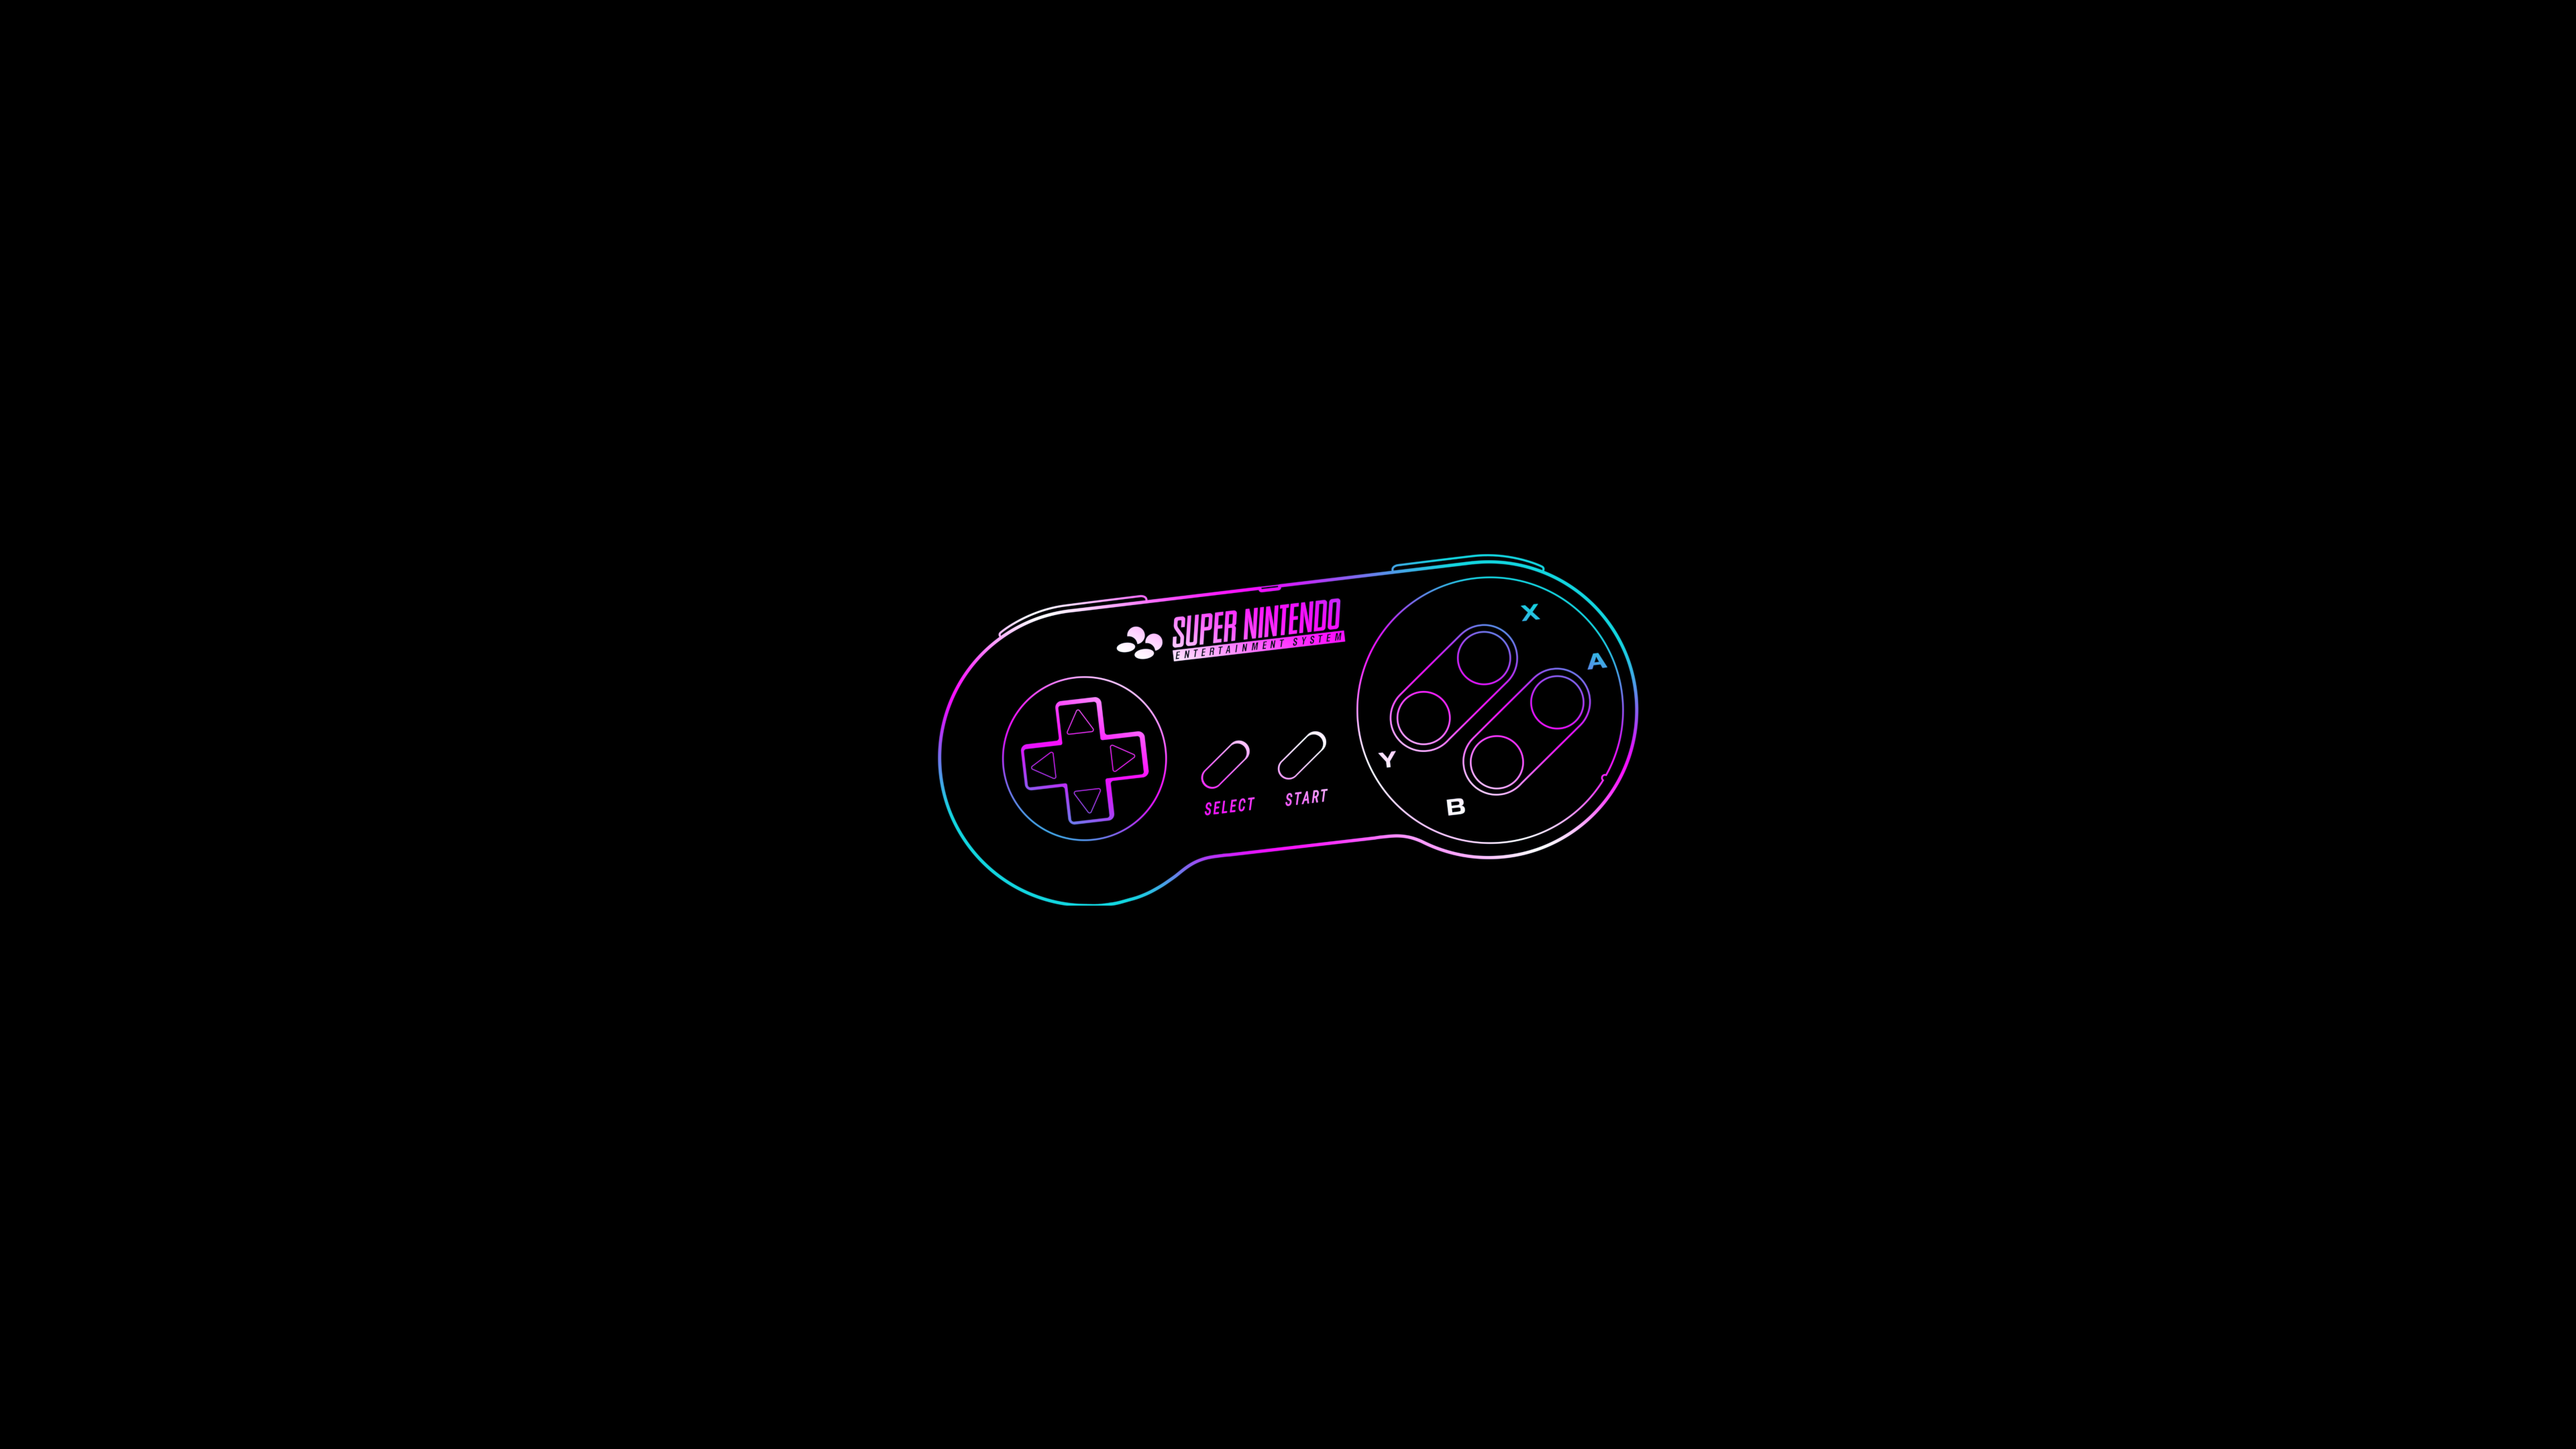 General 3840x2160 SNES joystick retro console dark background minimalism simple background black background controllers video games